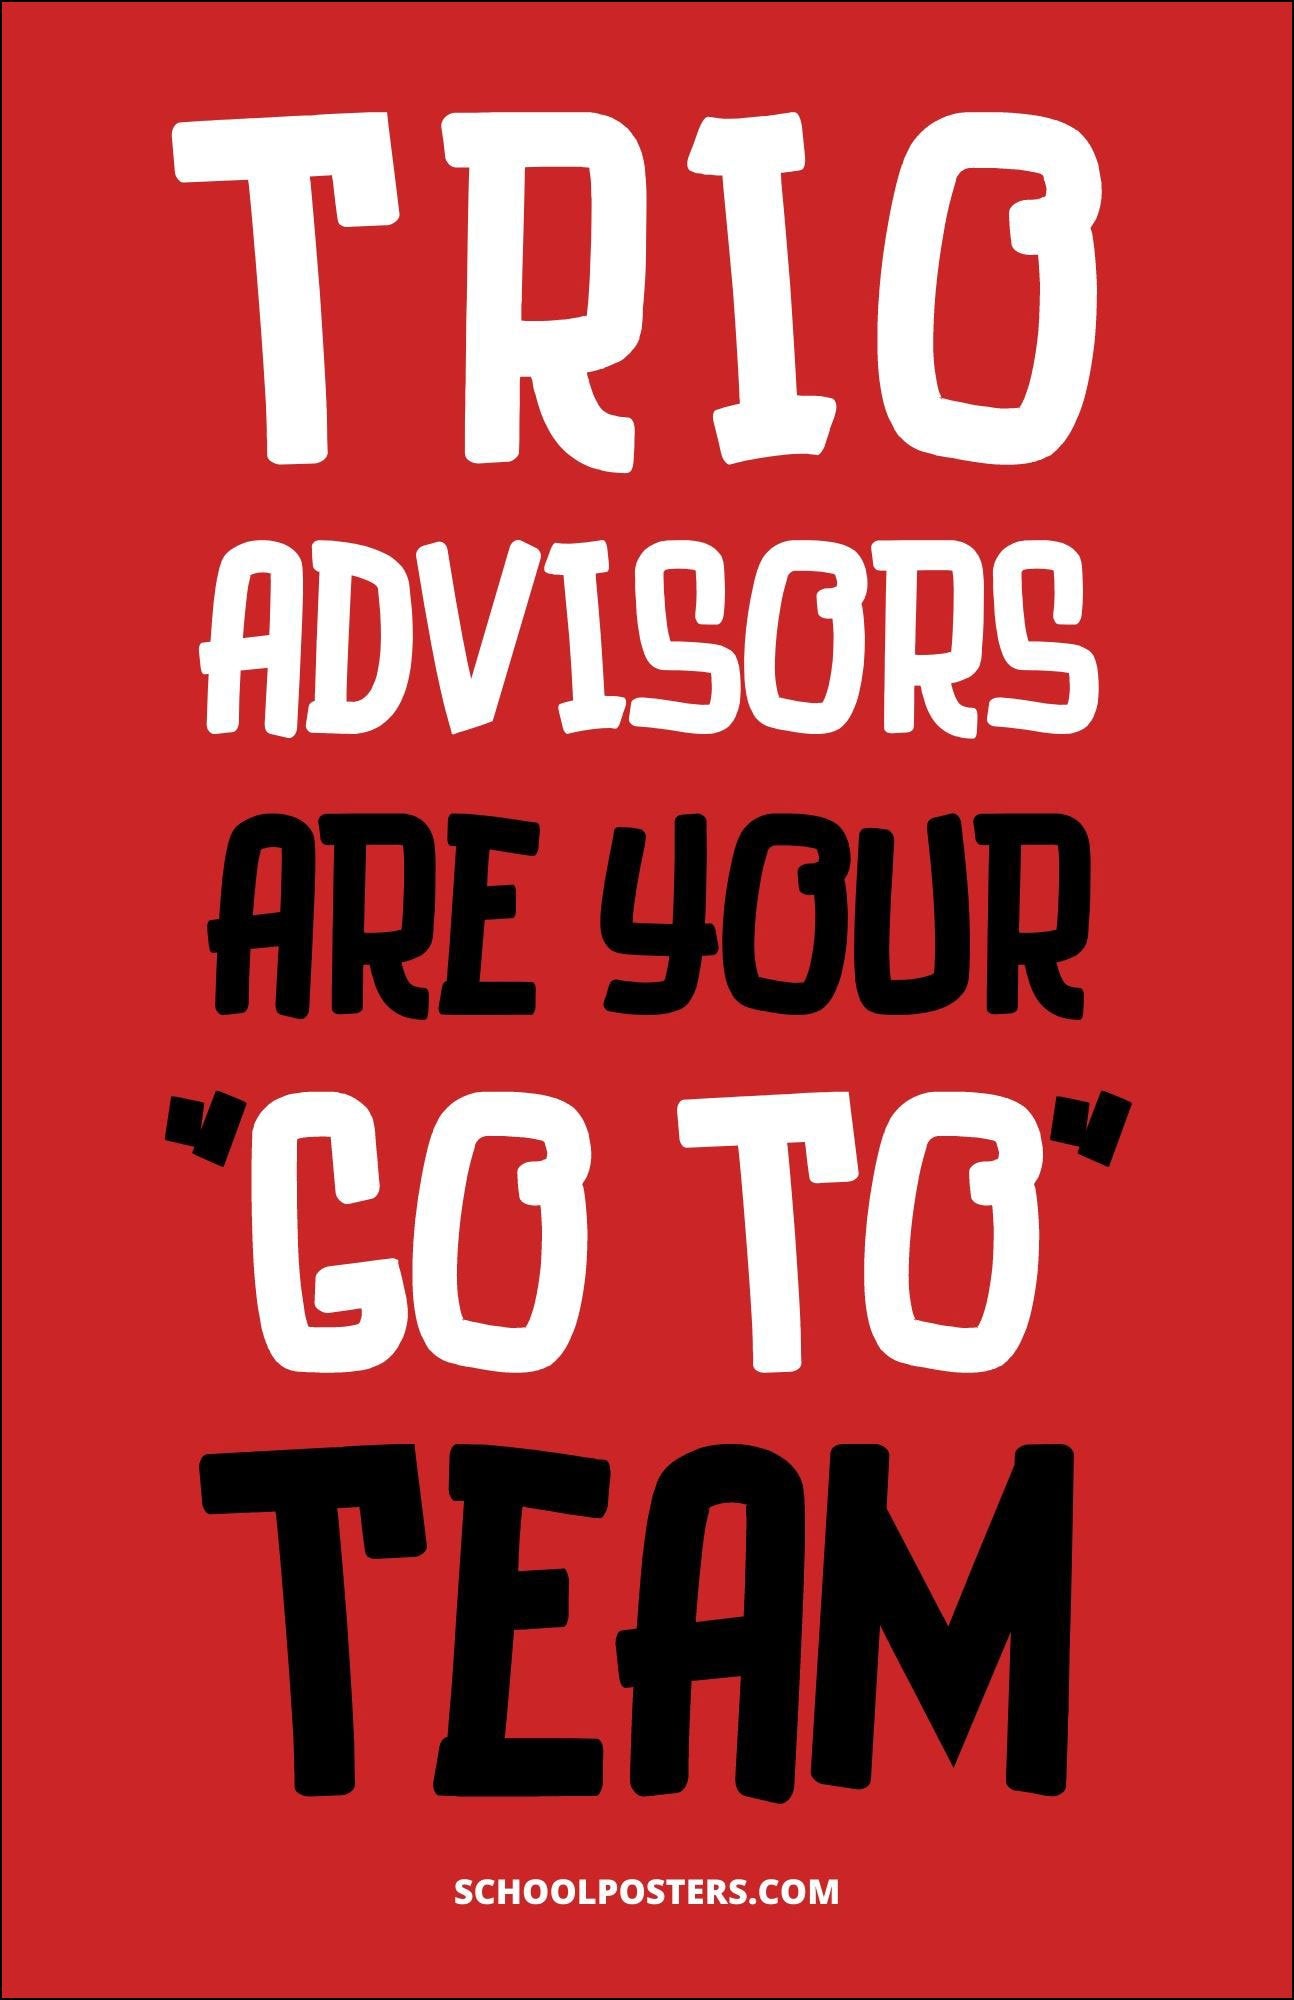 TRIO Advisors Poster